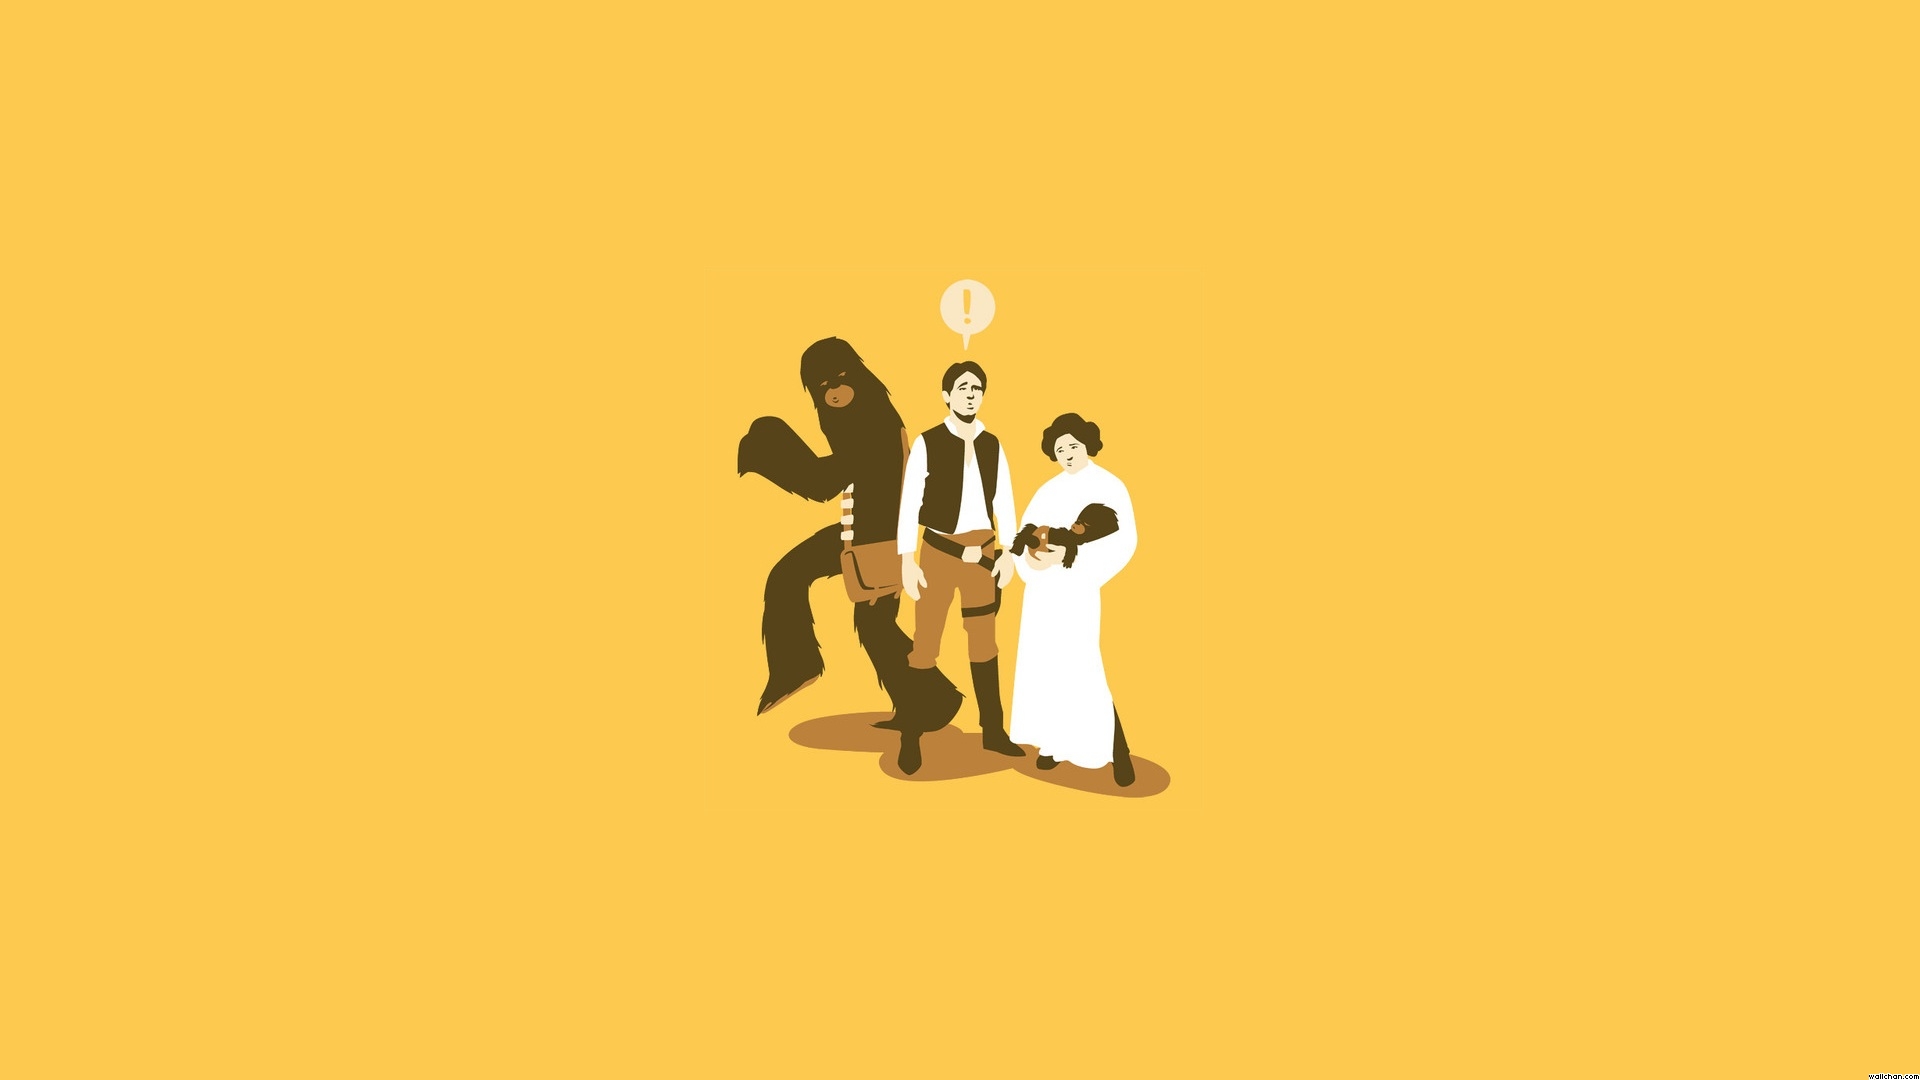 Funny Han Leia Chewie Wallpaper   Star Wars Wallpaper 24365492